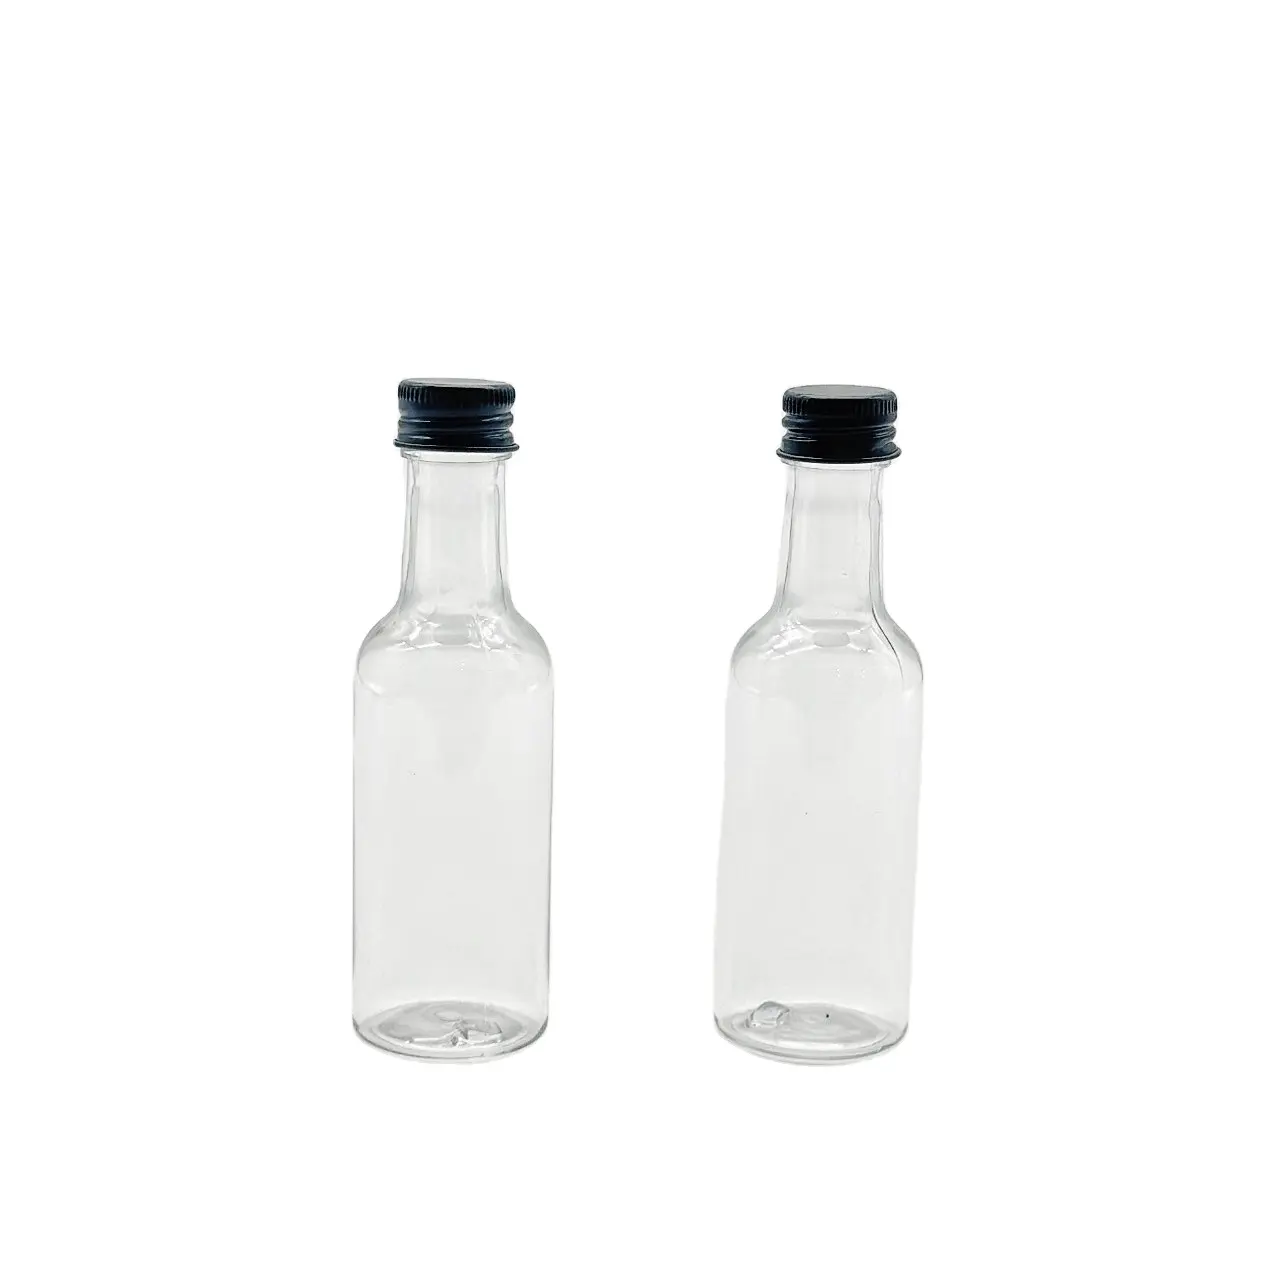 30ml50ml 100ml pequena capacidade carbonatada bebida garrafa plástico vinho garrafa pet pequeno refrigerante garrafa